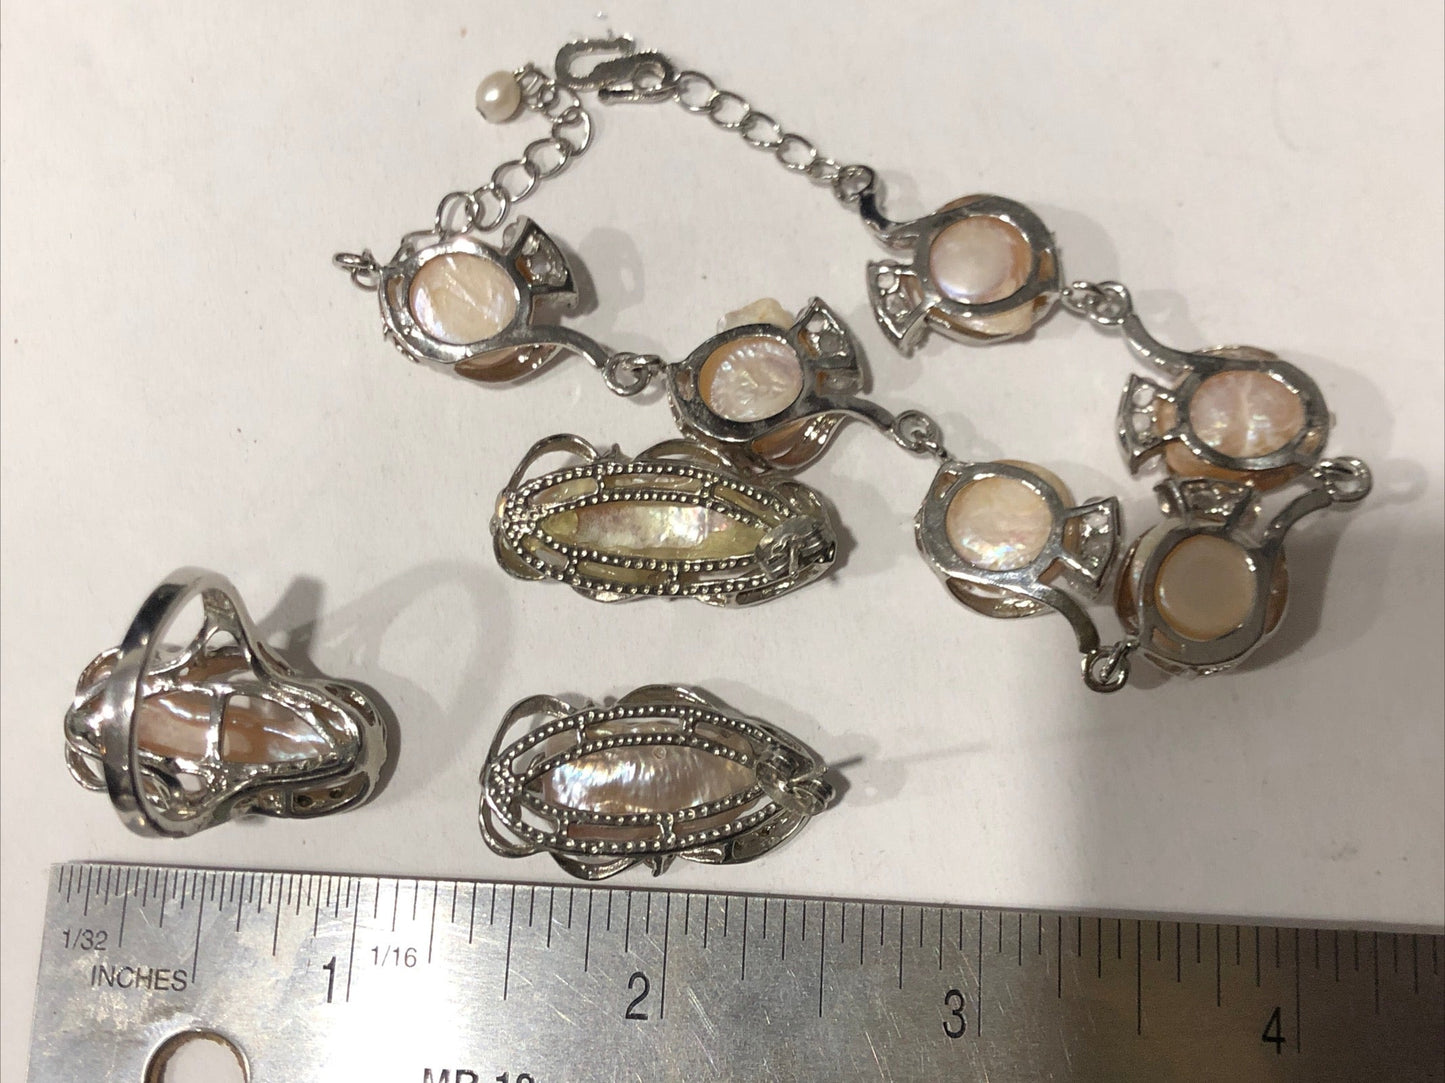 Freshwater baroque pearl bracelet earrings ring set silver tone